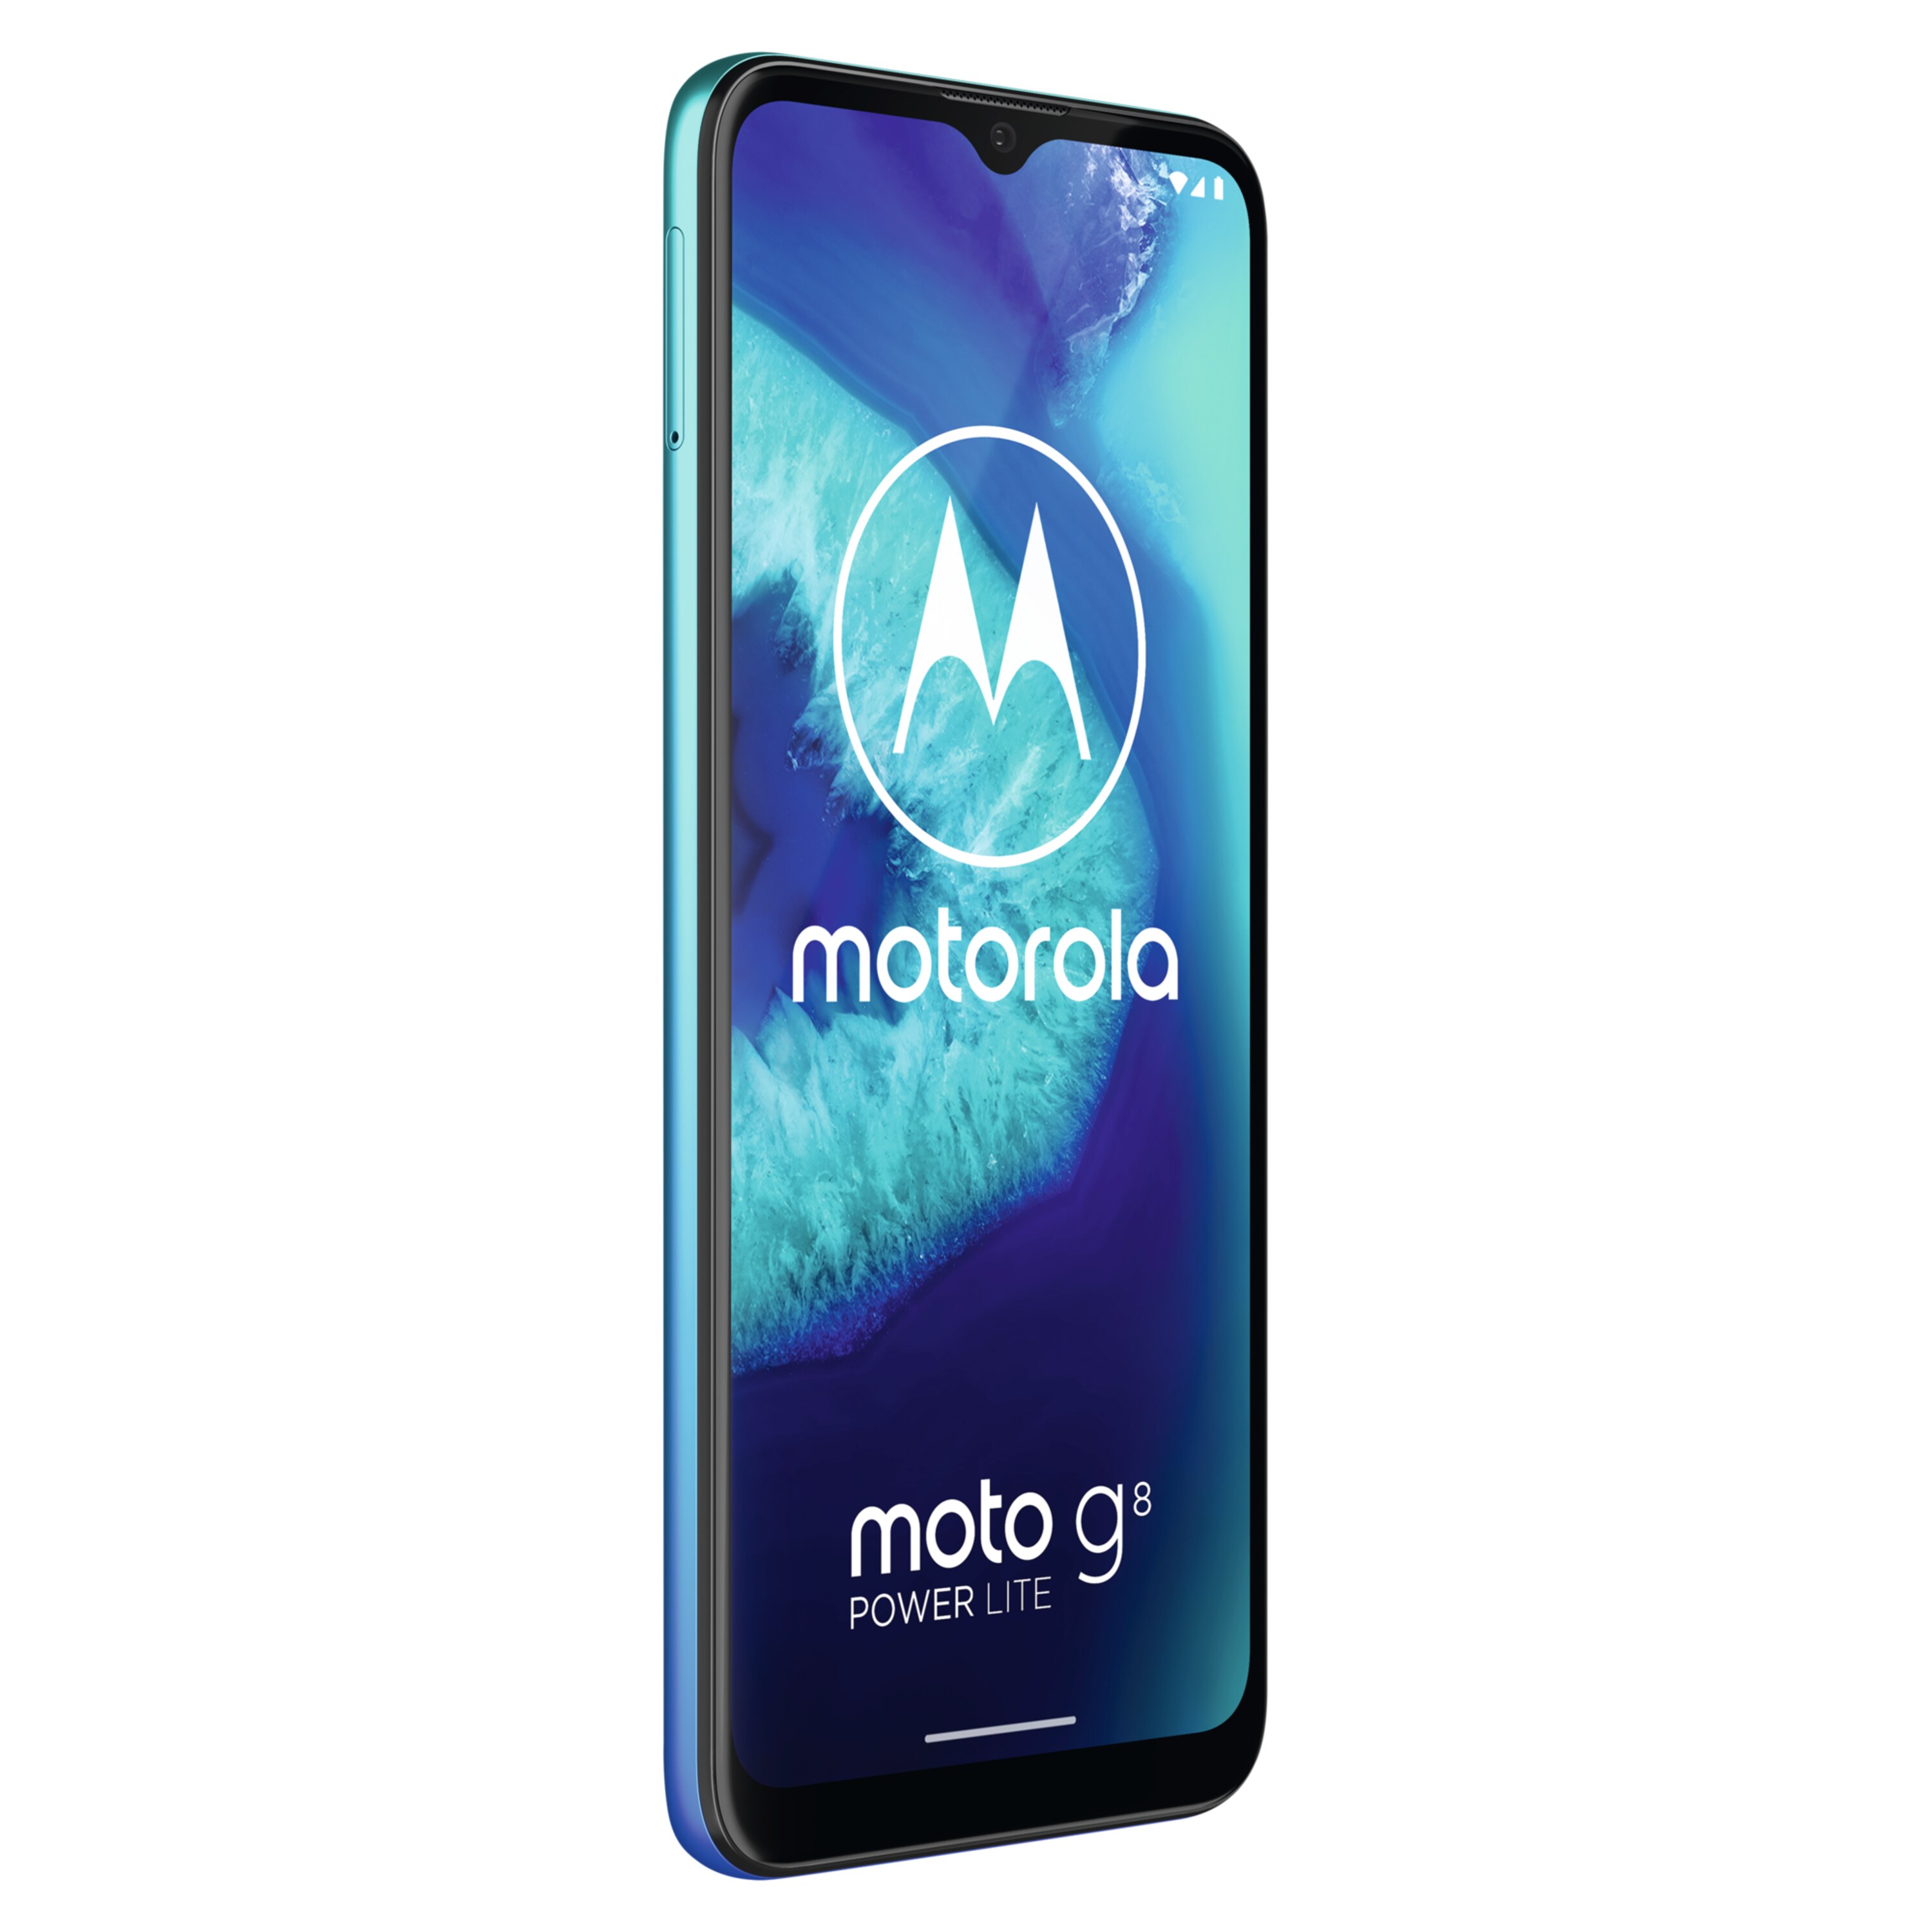 MOTOROLA moto g8 power lite Smartphone, 16,51 cm (6,5") HD+ Display, Android™ 10, 64 GB Speicher, Octa- Core-Prozessor, Dual-SIM, Bluetooth® 4.2